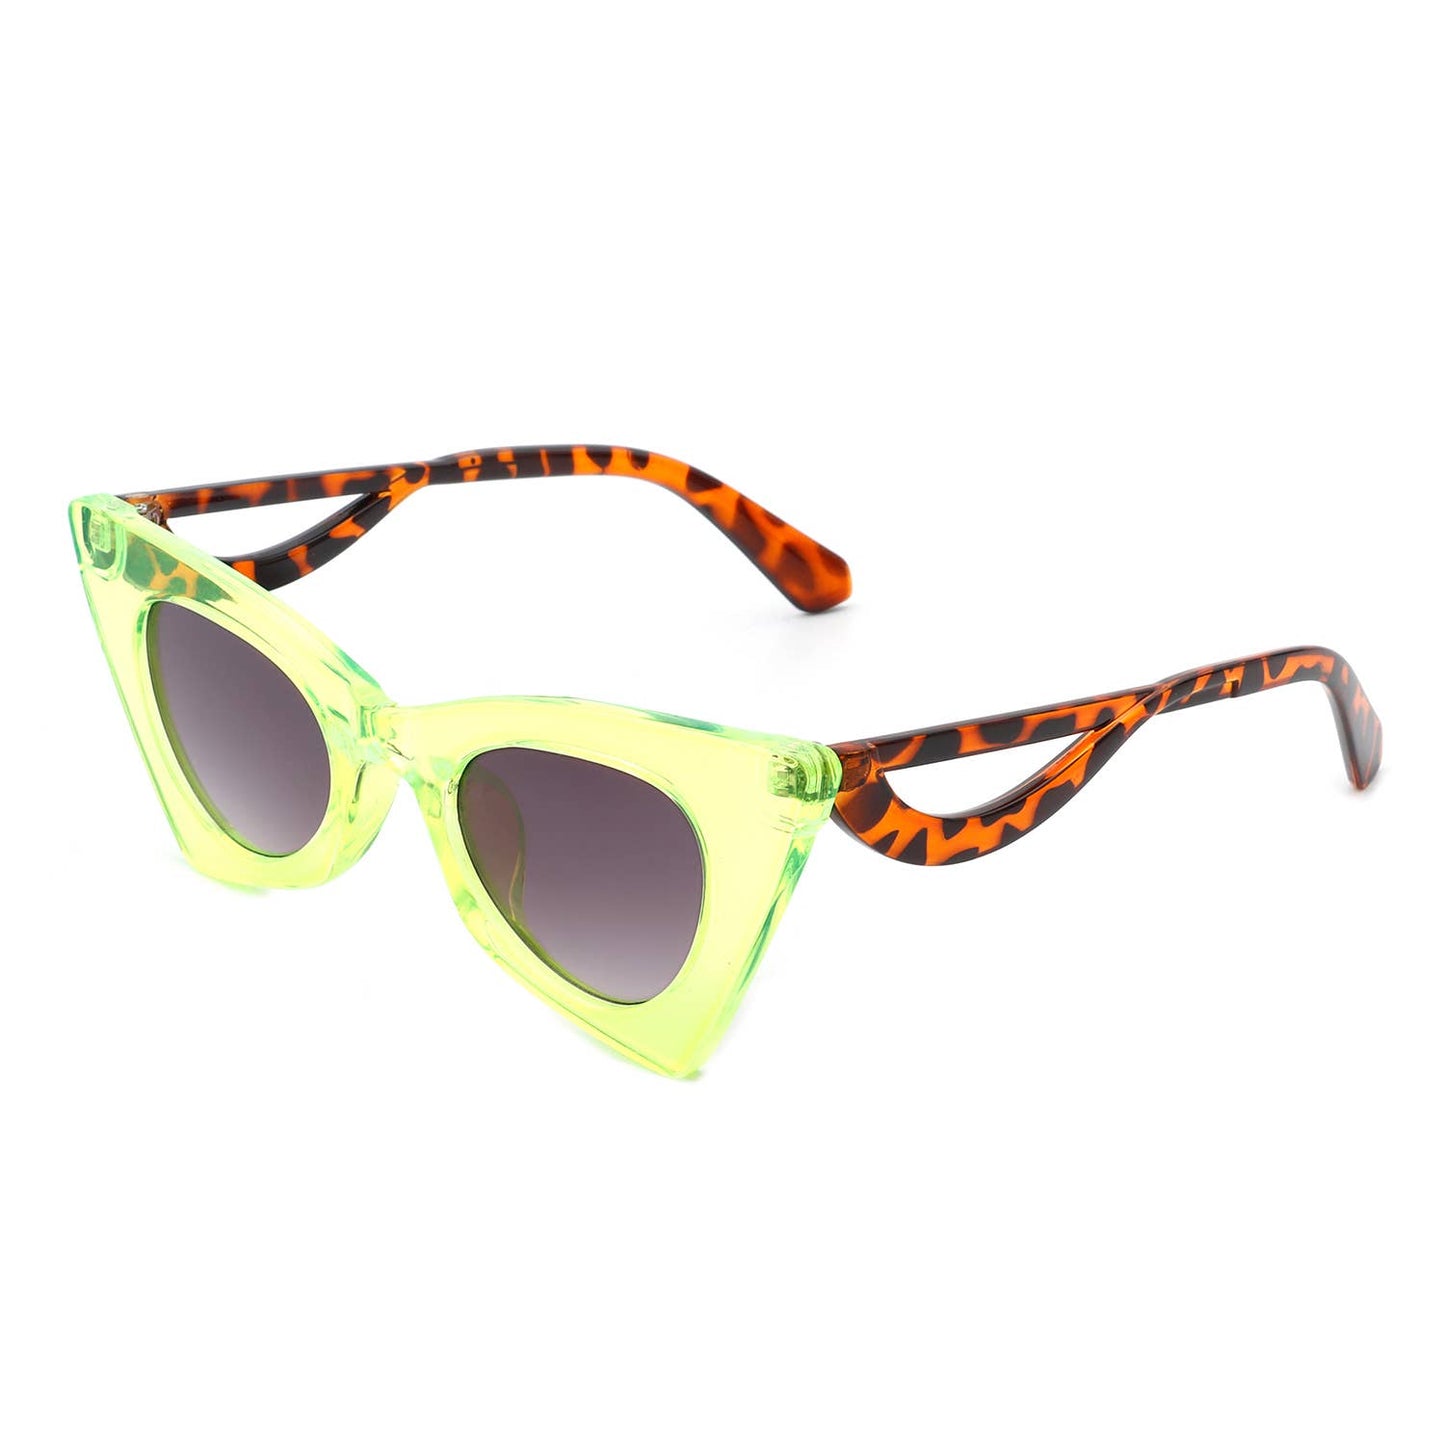 Retro High Pointed Vintage Fashion Cat Eye Sunglasses